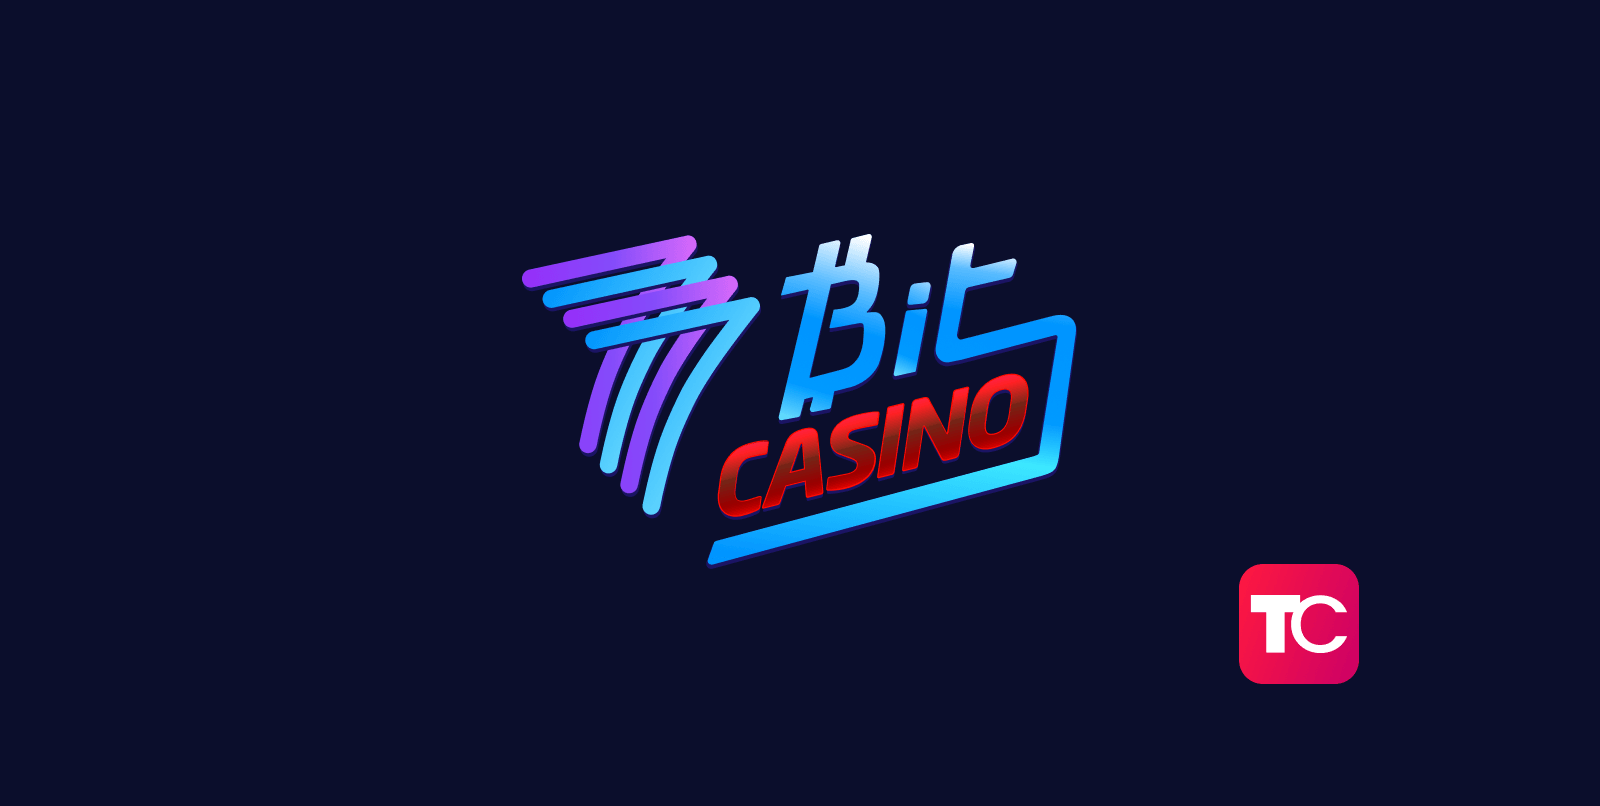 7bitcasino welcome bonus 7bitcasino no deposit bonus bonus casino review topcasinos